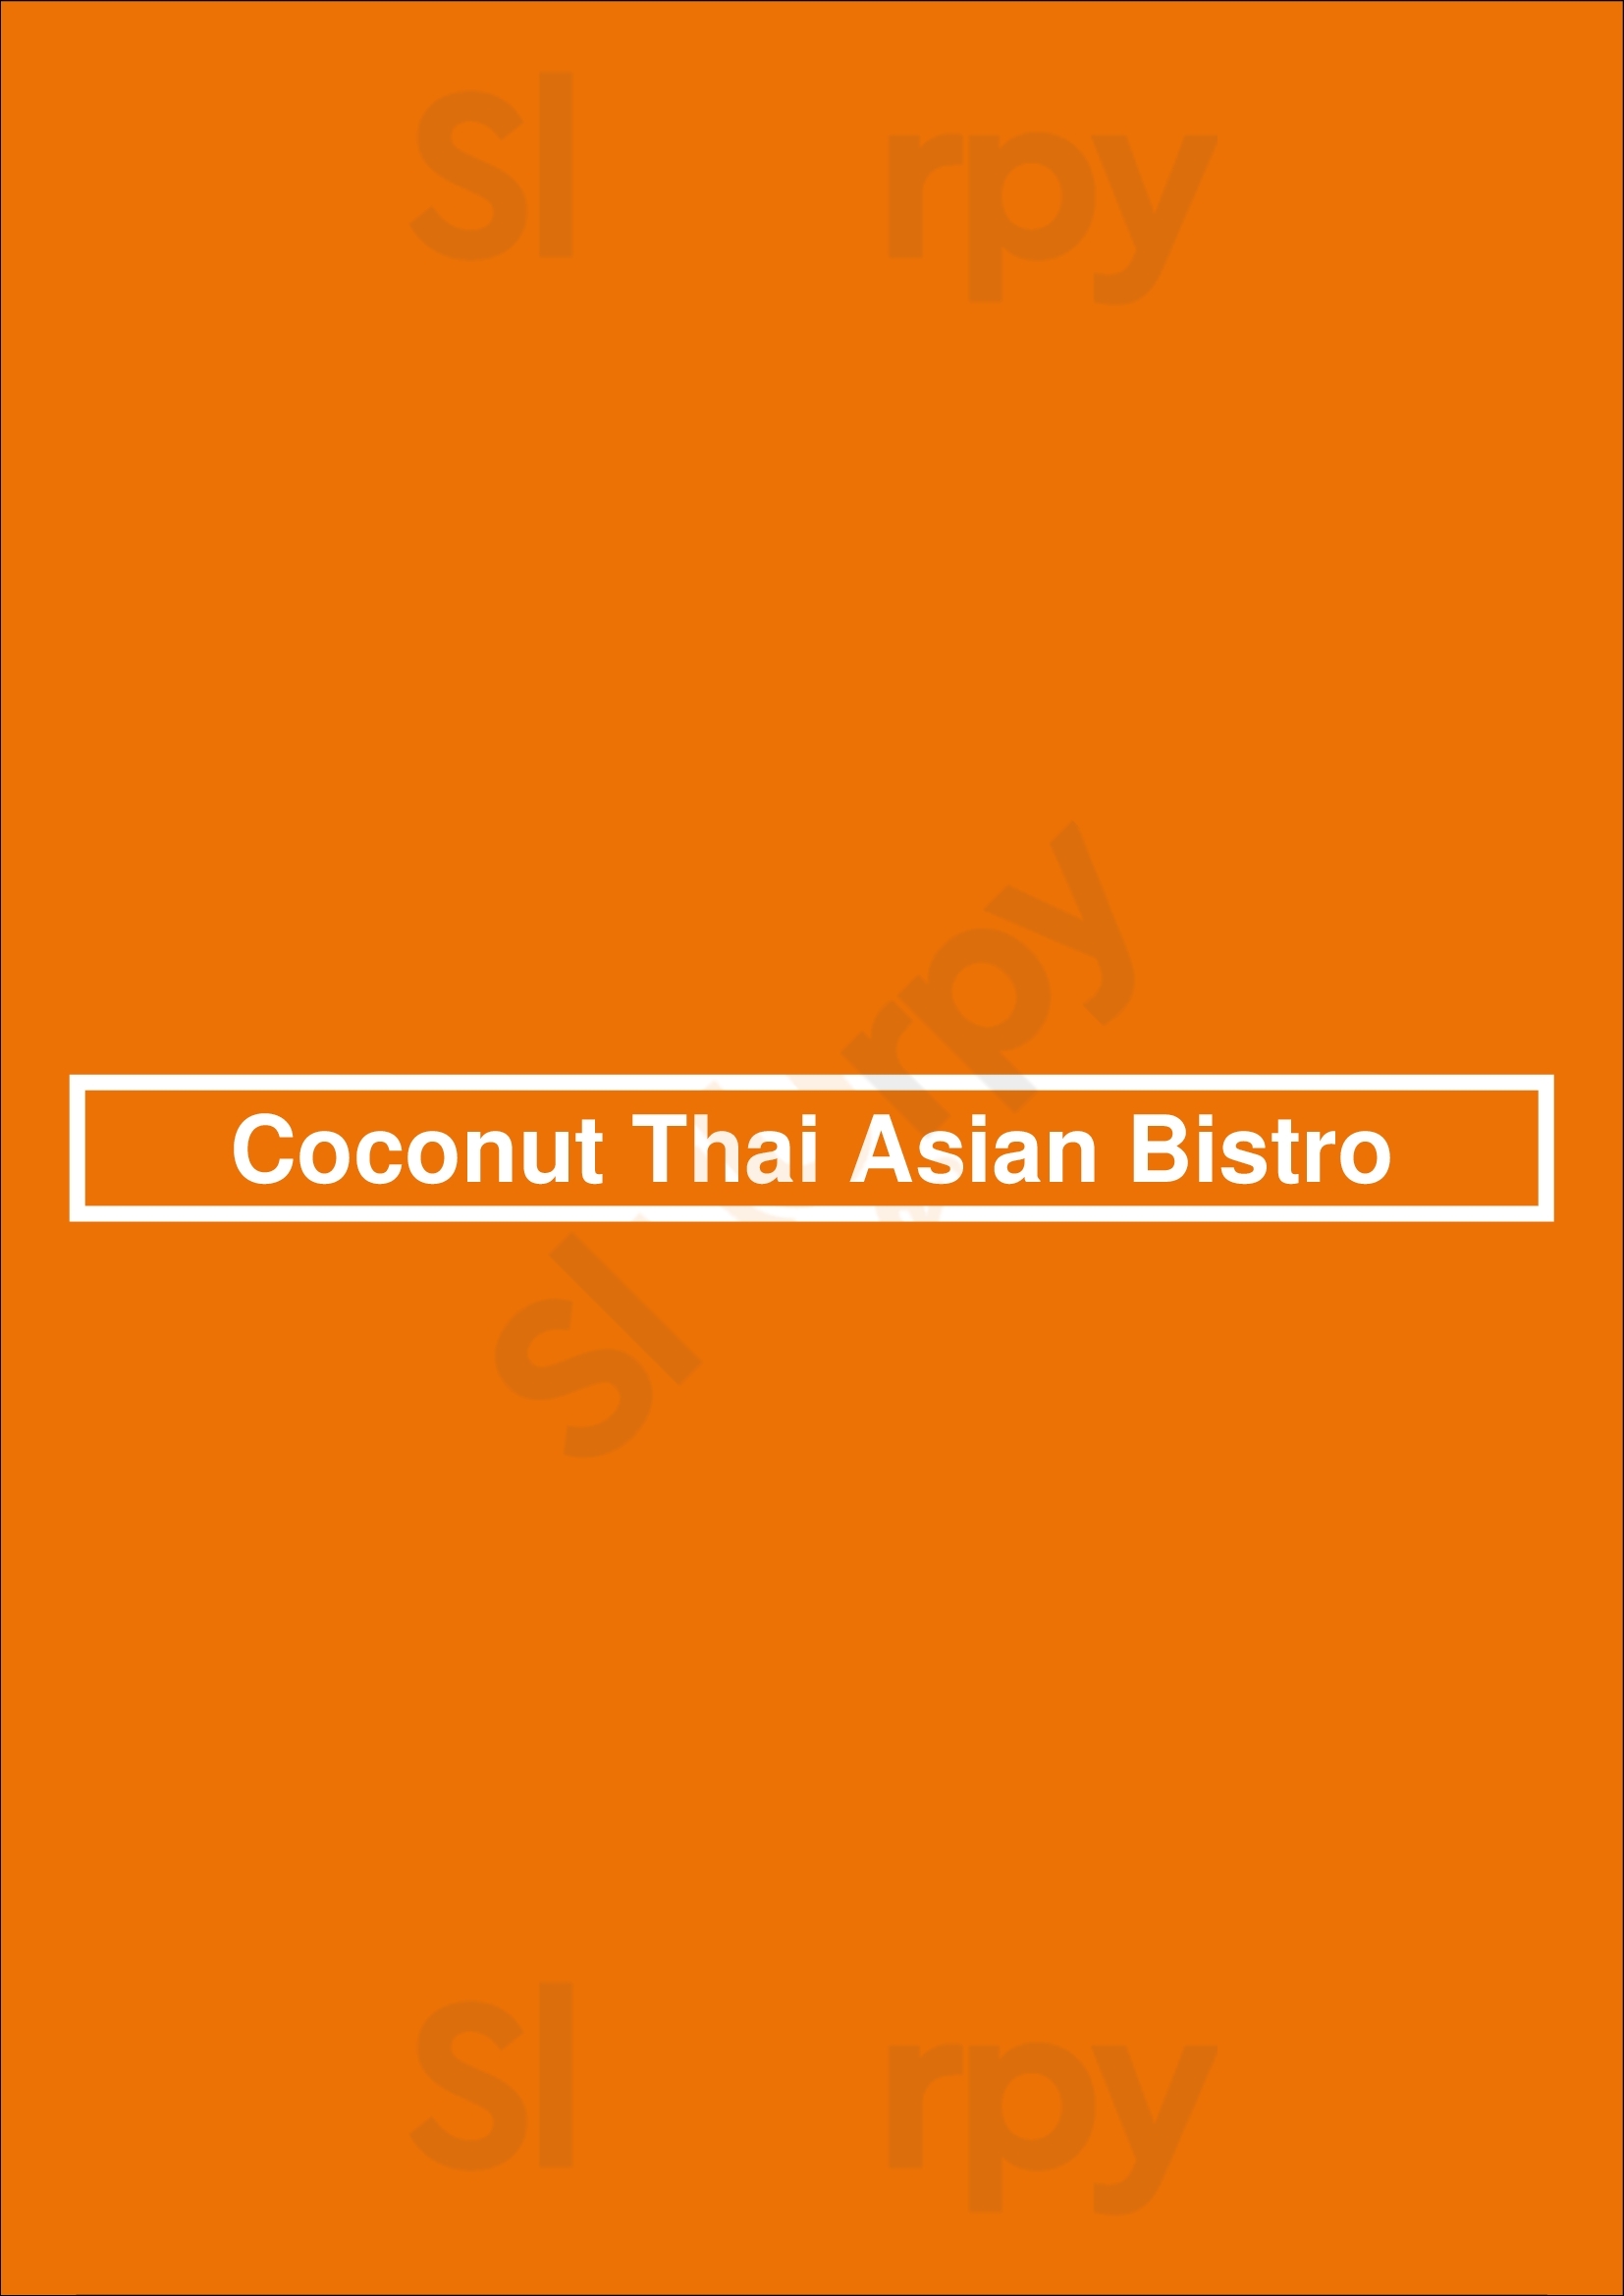 Coconut Thai Asian Bistro San Diego Menu - 1